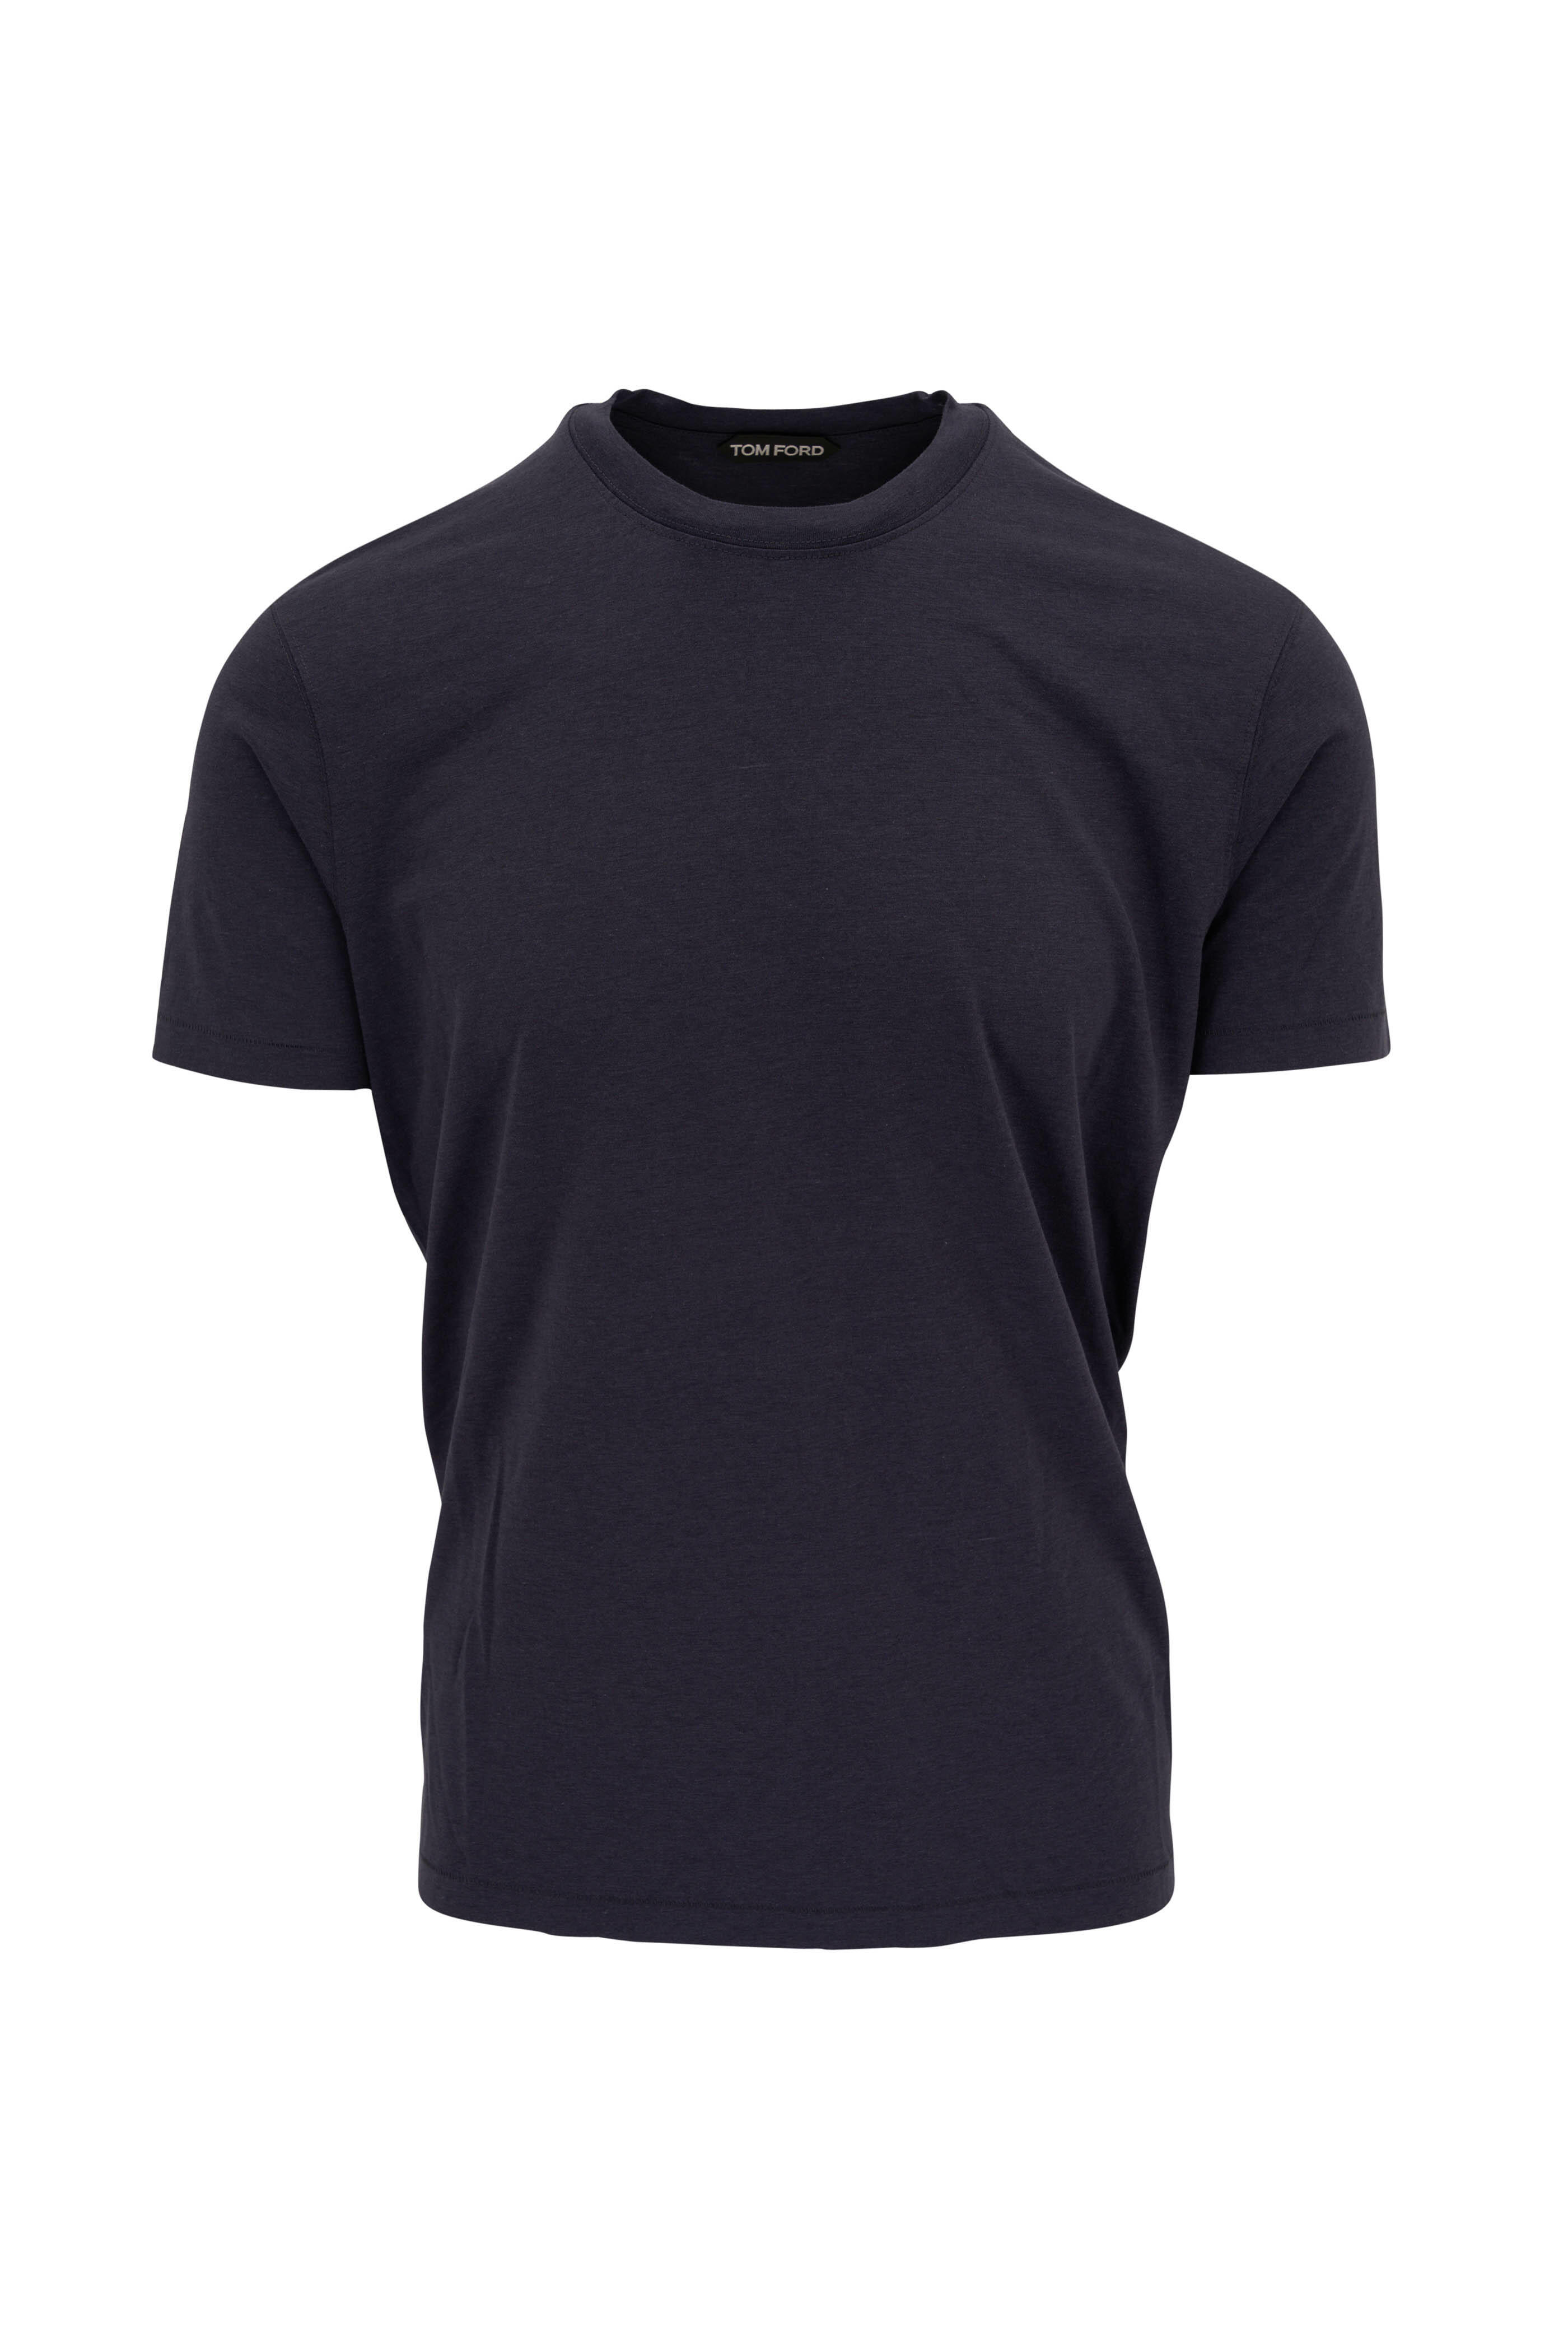 Tom Ford - Dark Blue Crewneck T-Shirt | Mitchell Stores